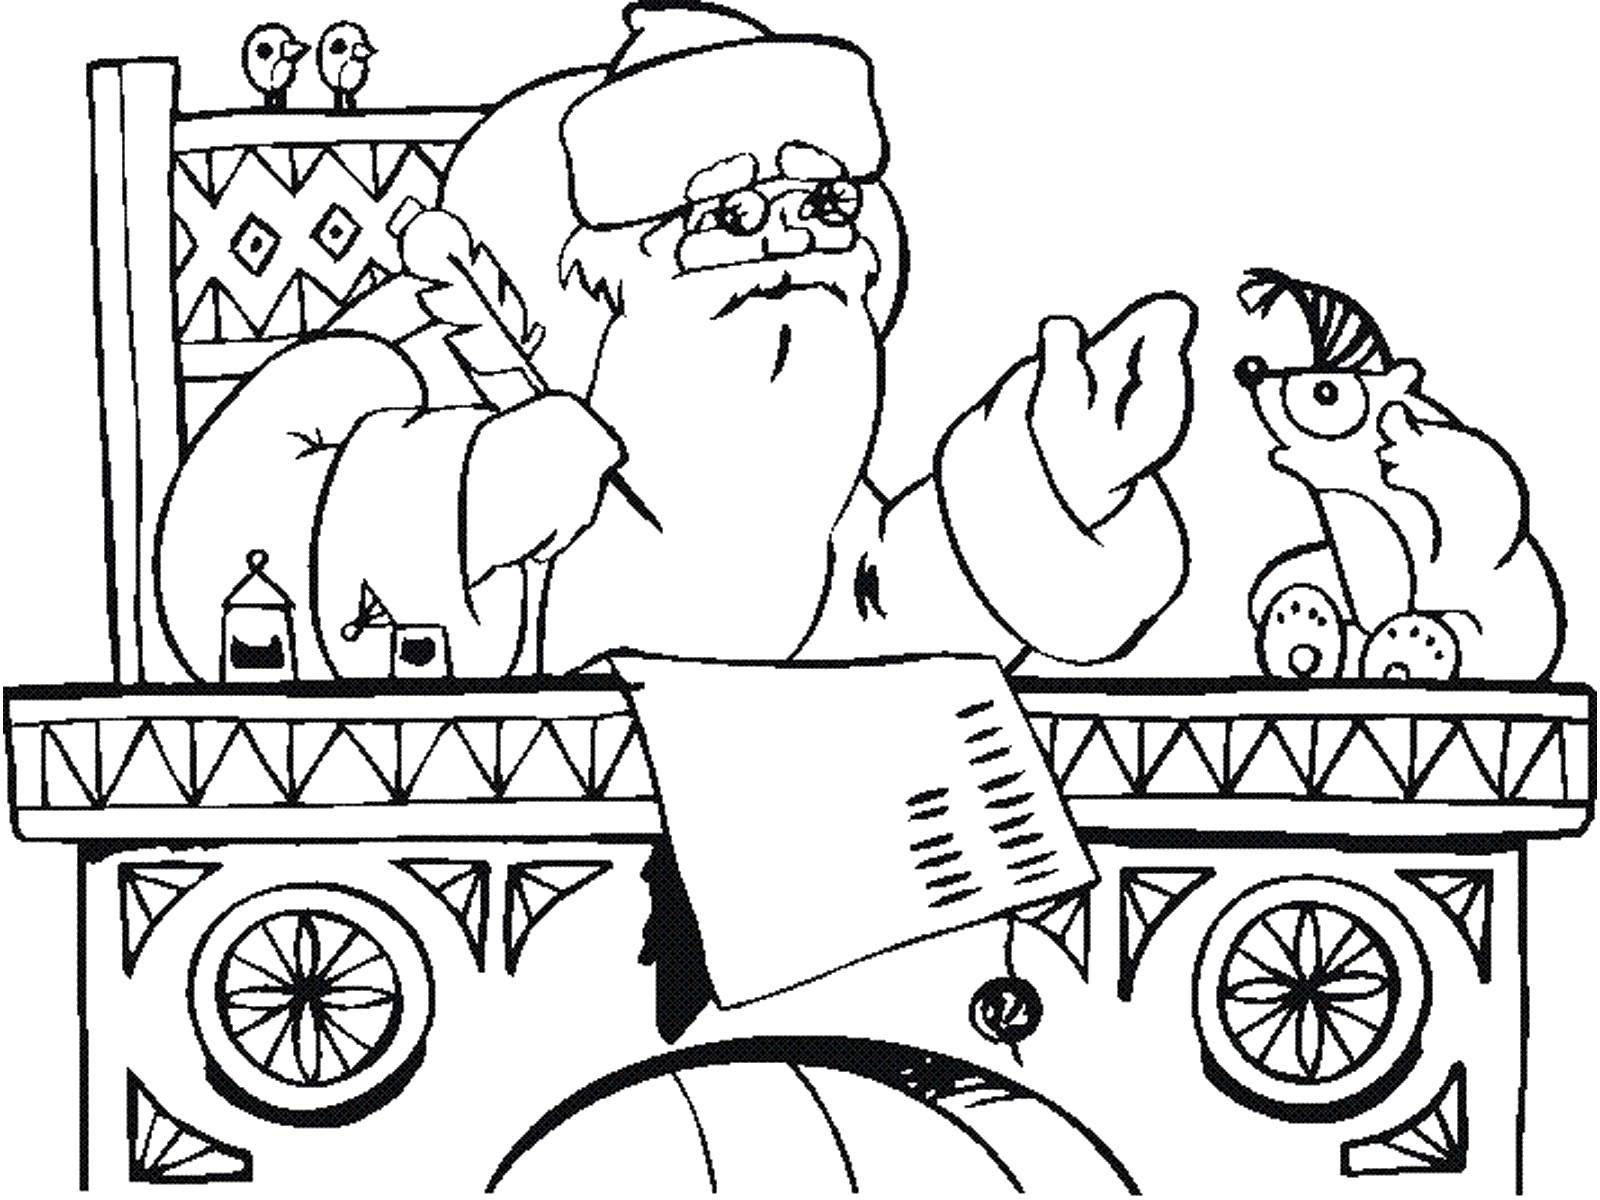 Coloring Santa Claus responds to pismo. Category new year. Tags:  New Year, Santa Claus, Santa Claus, gifts.